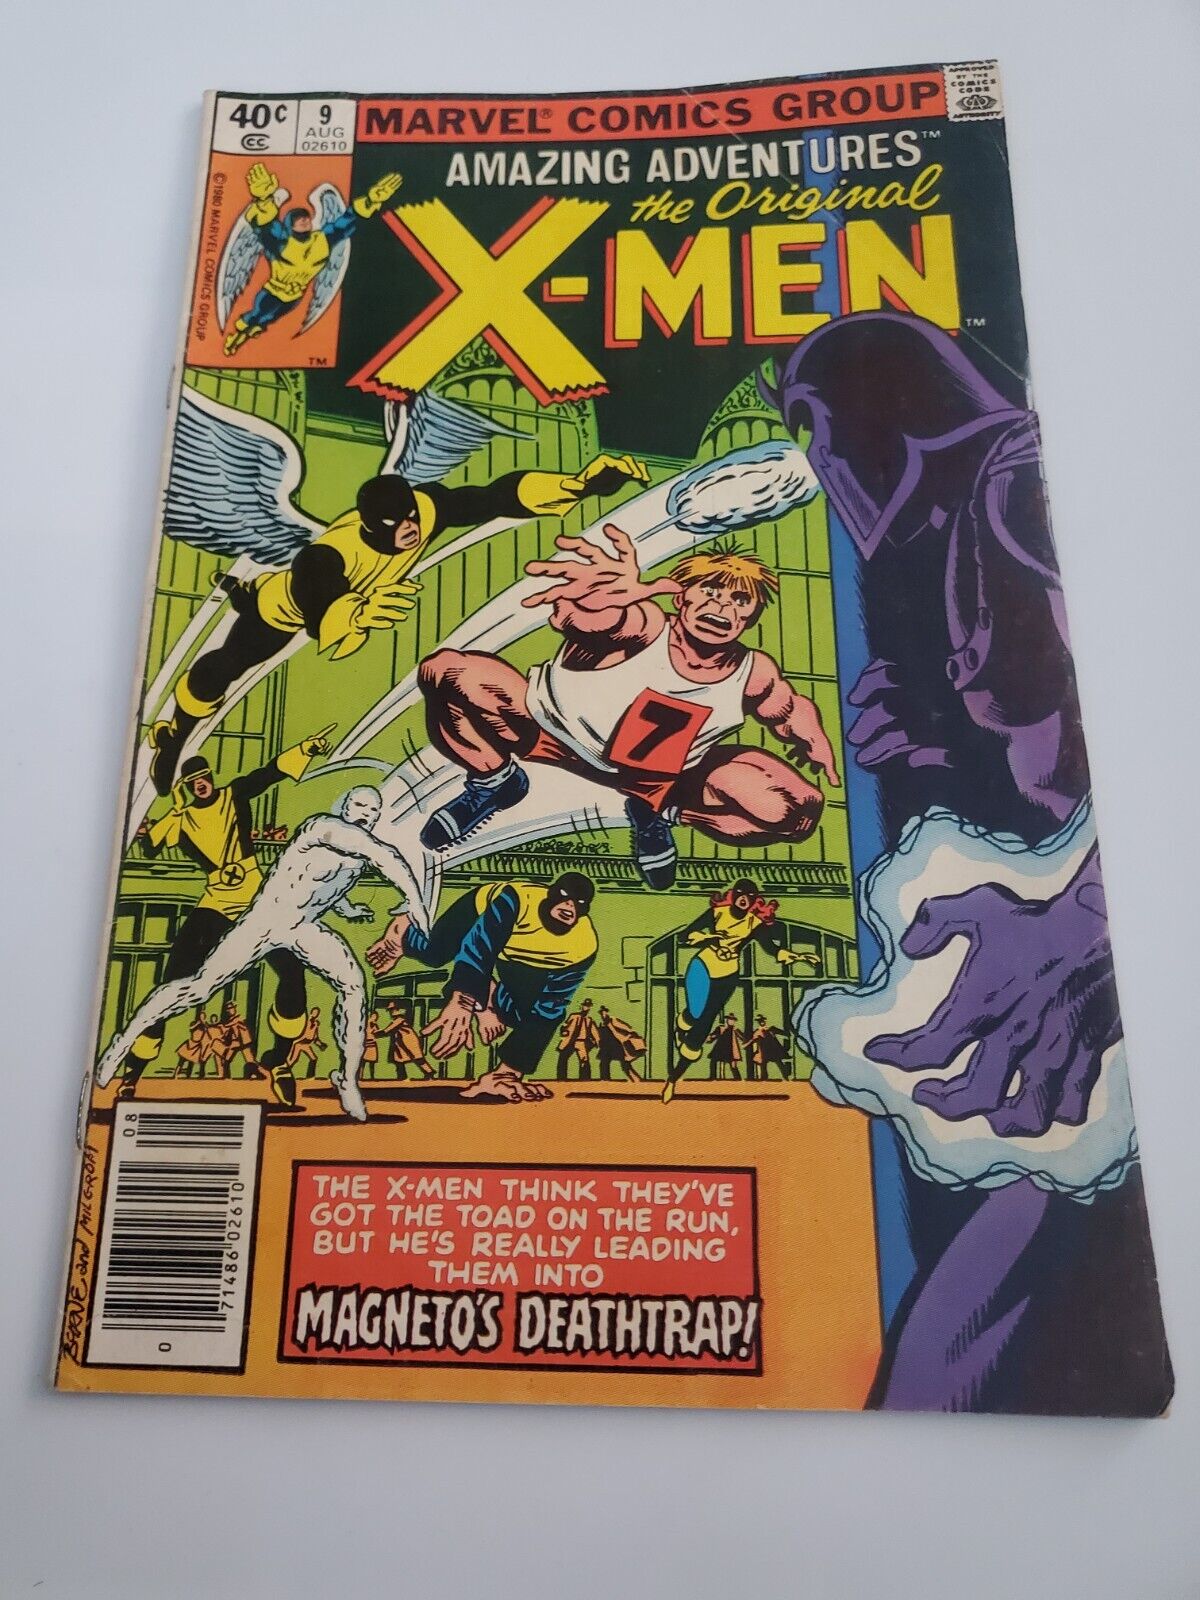 Amazing Adventures The Original X-Men Number 9 August 1980 Marvel Comics Group